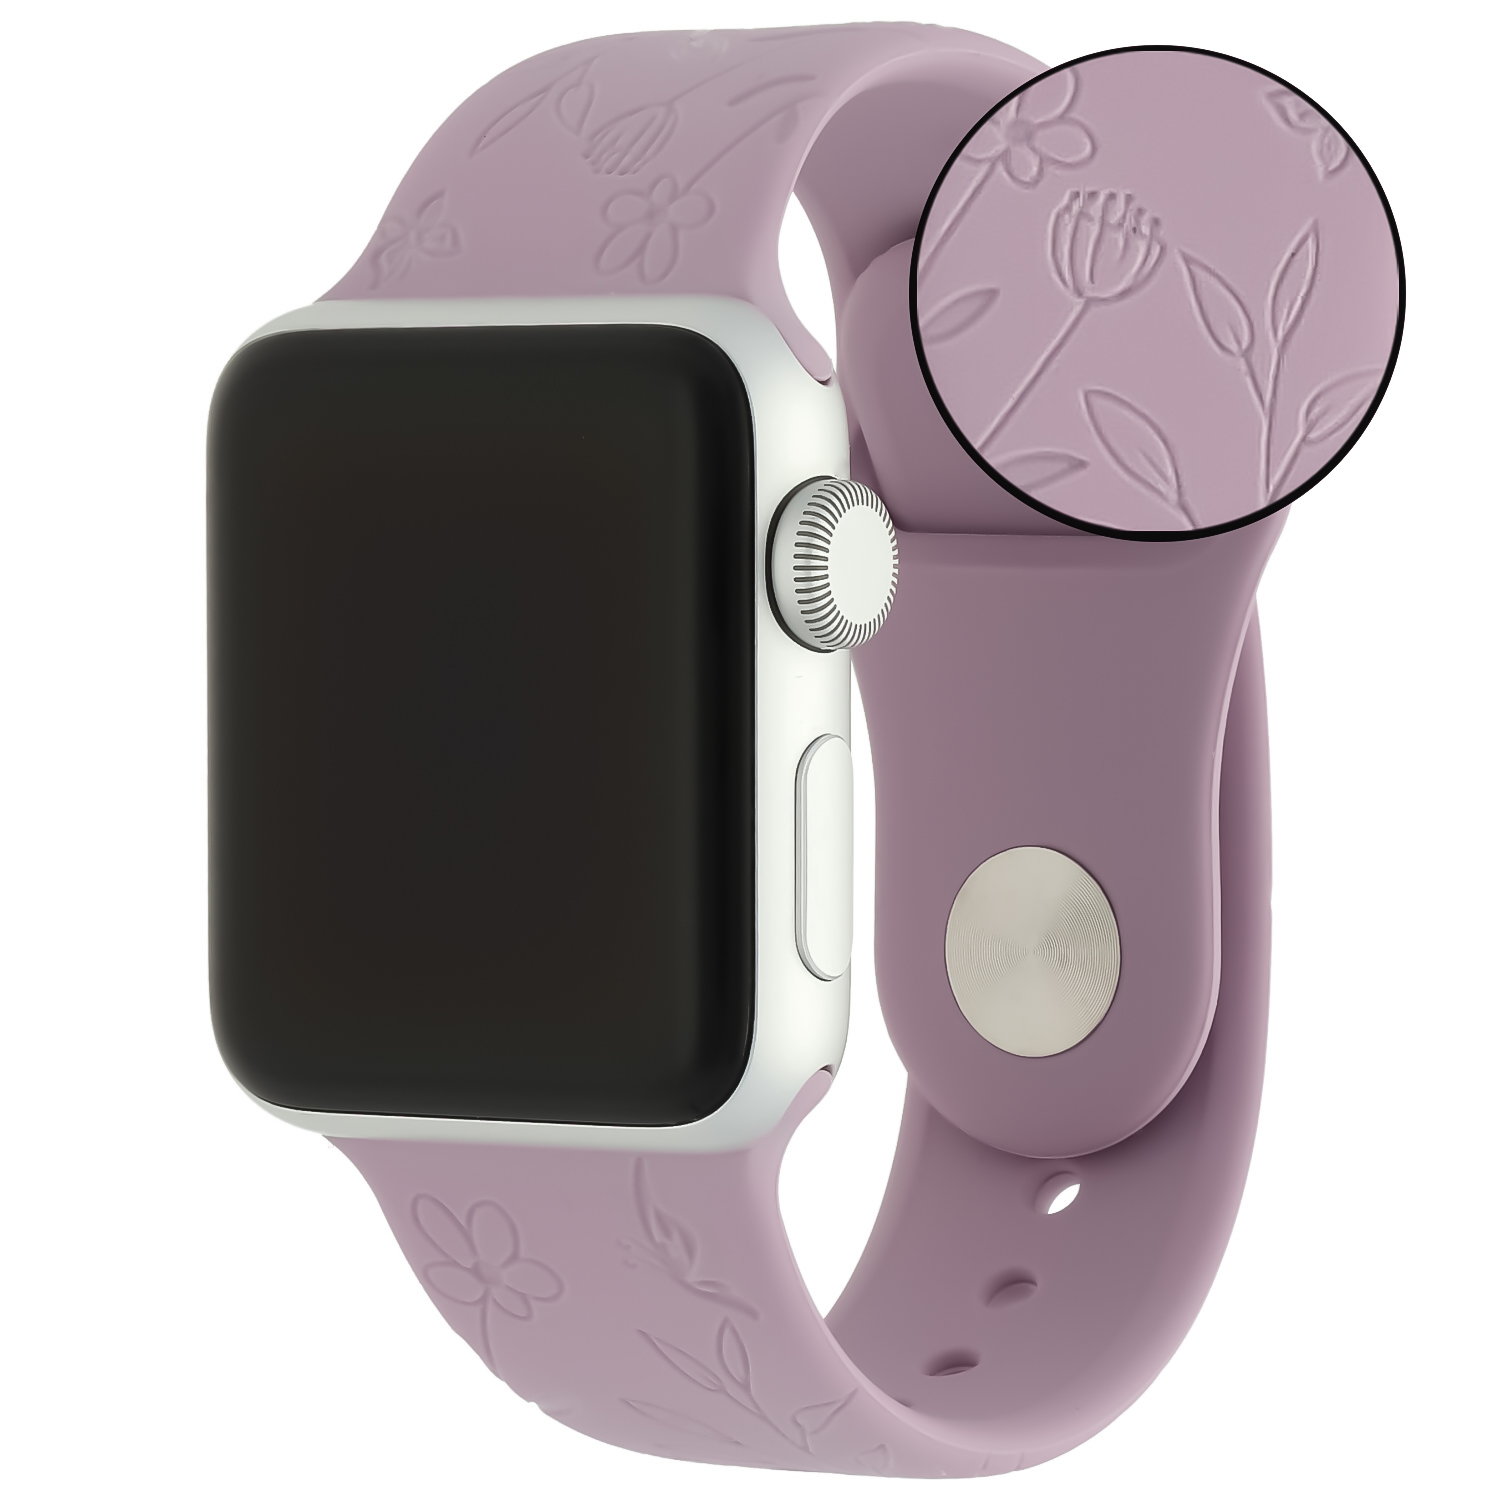 Apple Watch druck Sportarmband - Blumen lila